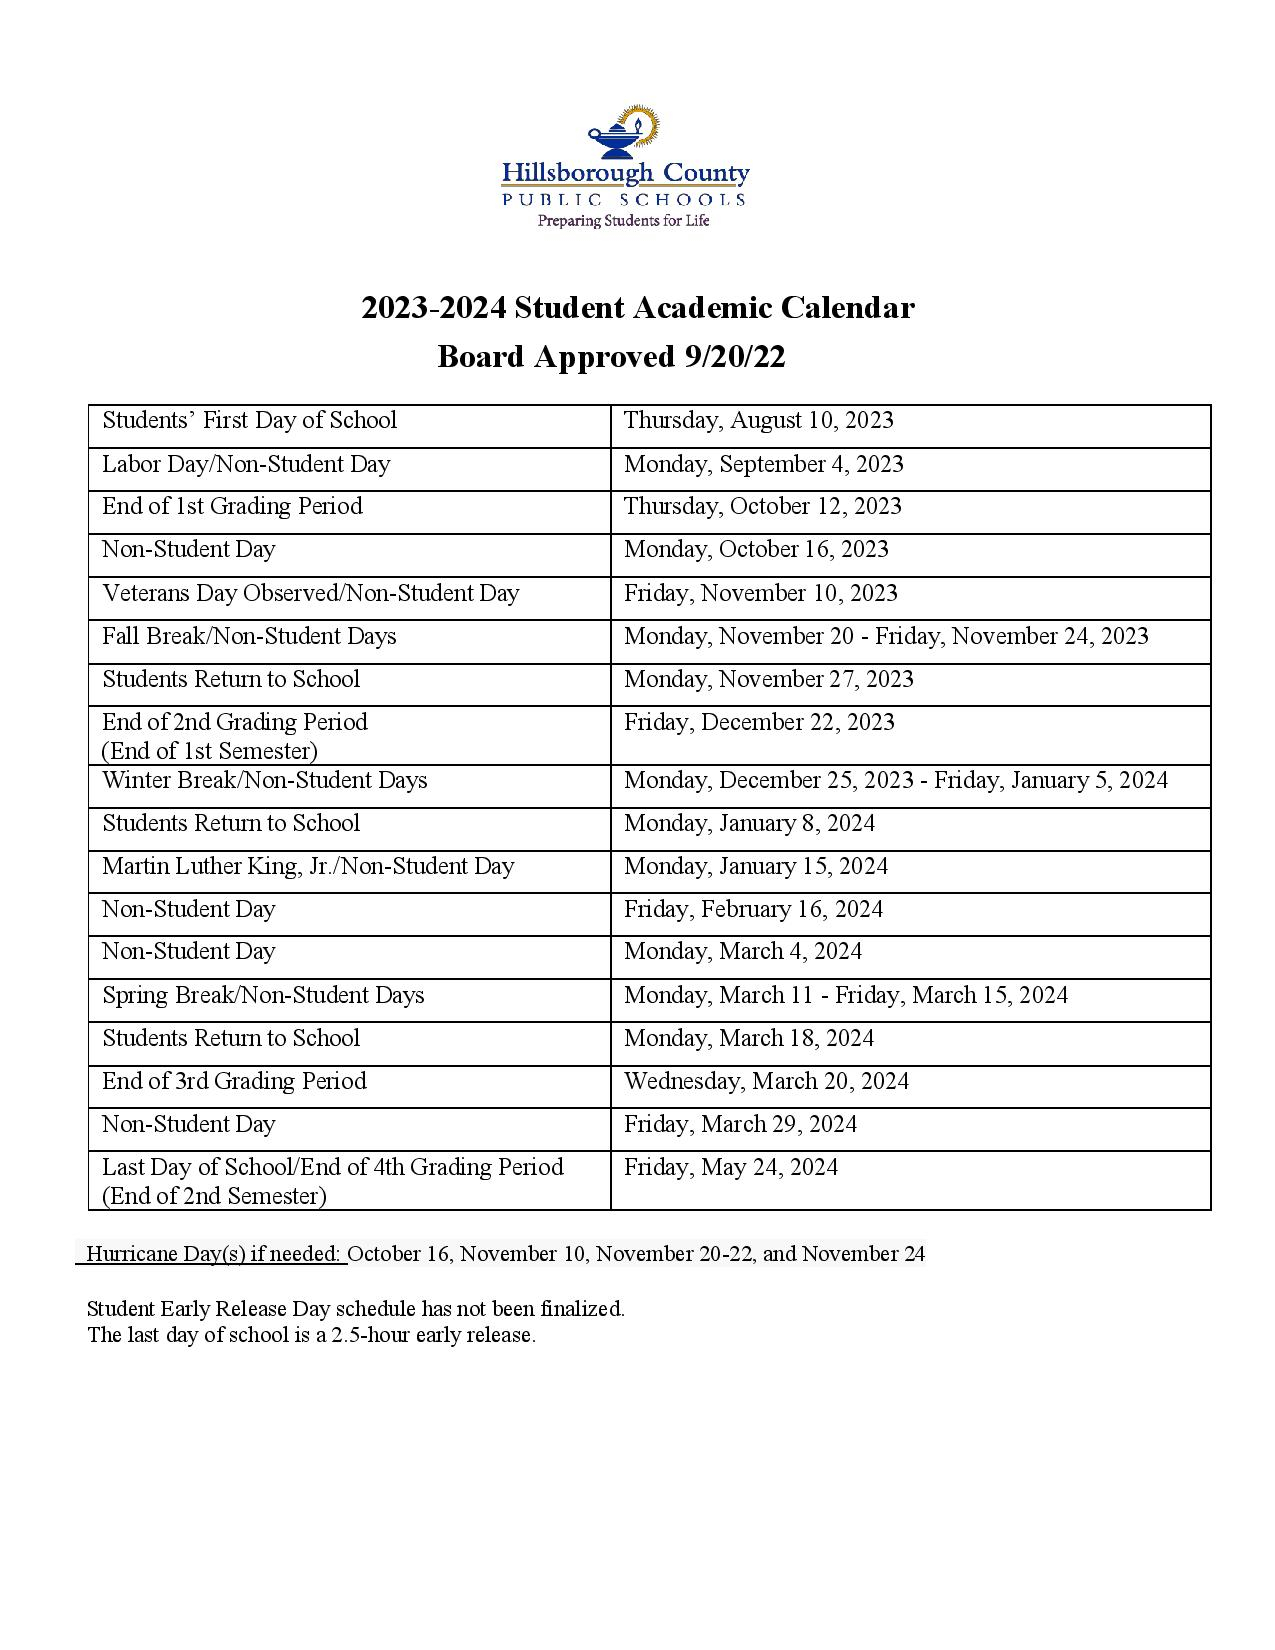 Hillsborough County Schools Calendar For 2022 2024